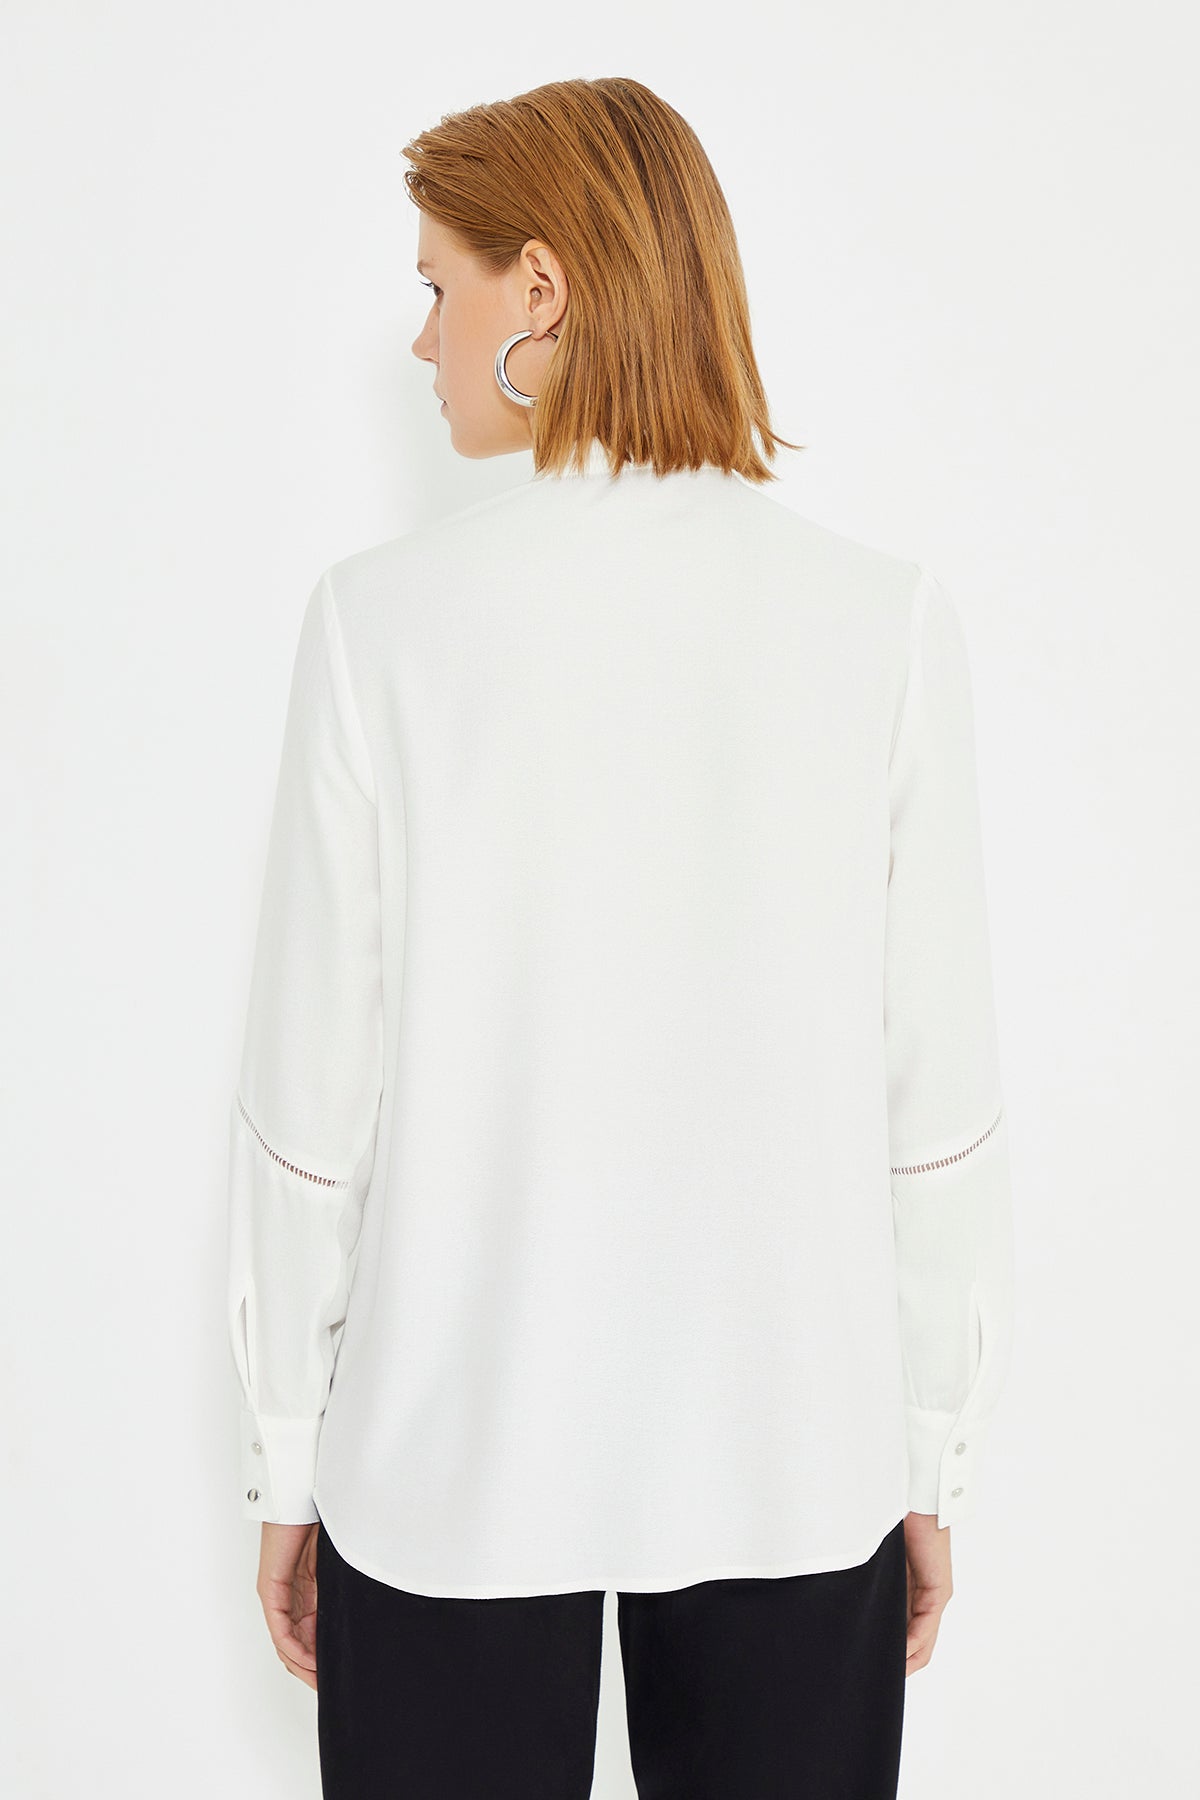 White Long Sleeve Ladder Strip Women's Shirt